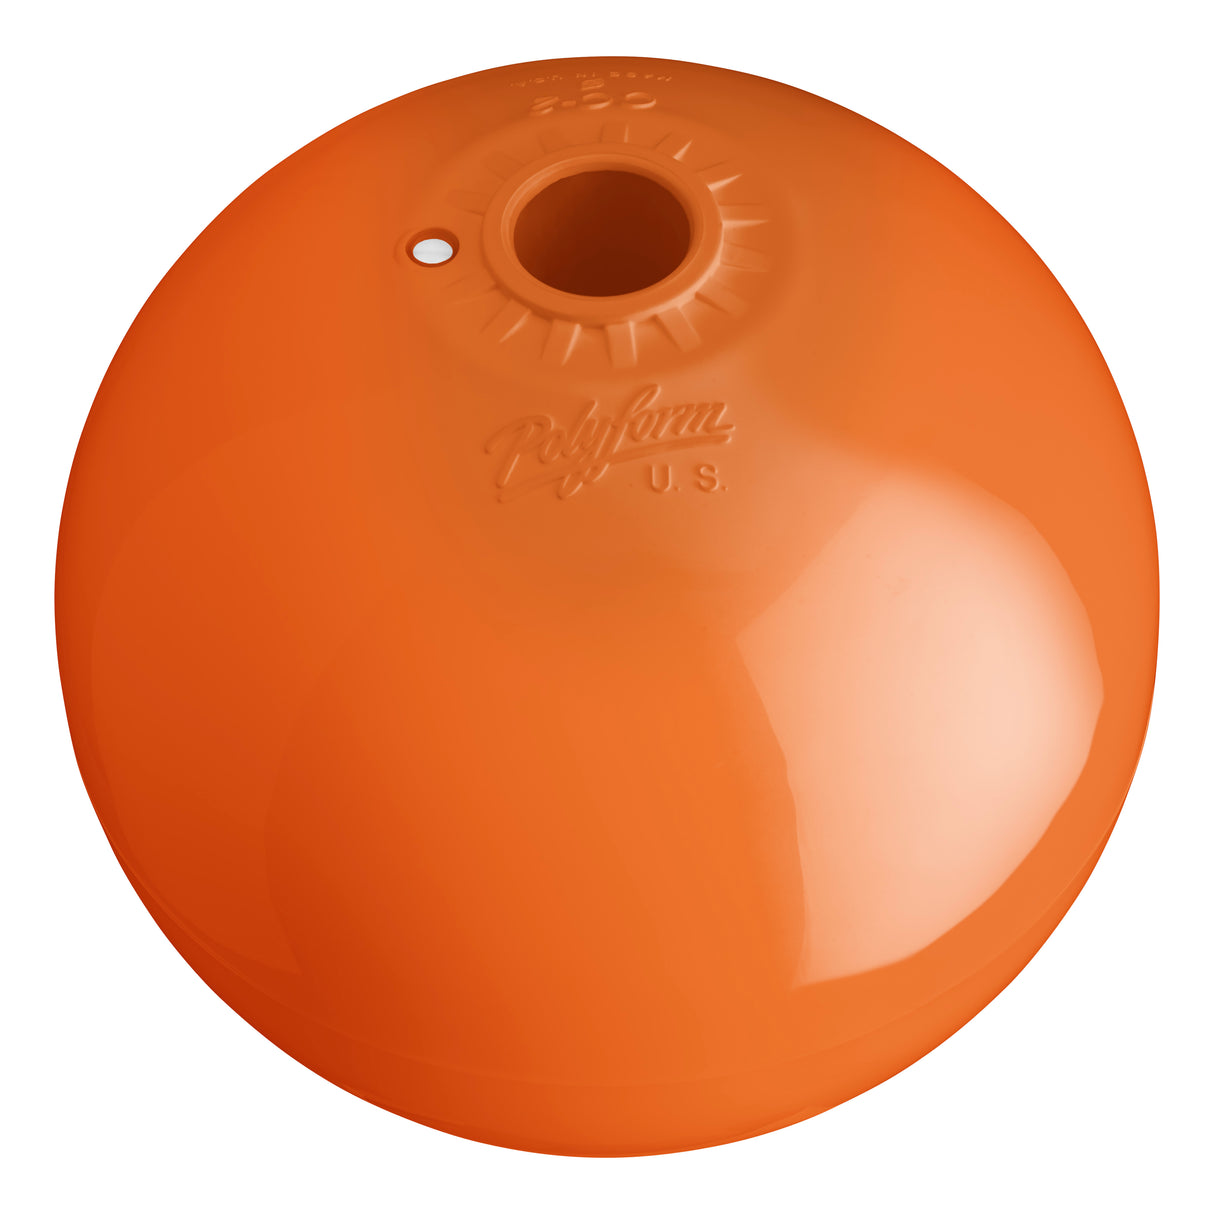 Hole through center mooring and marker buoy, Polyform CC-5 International Orange angled shot